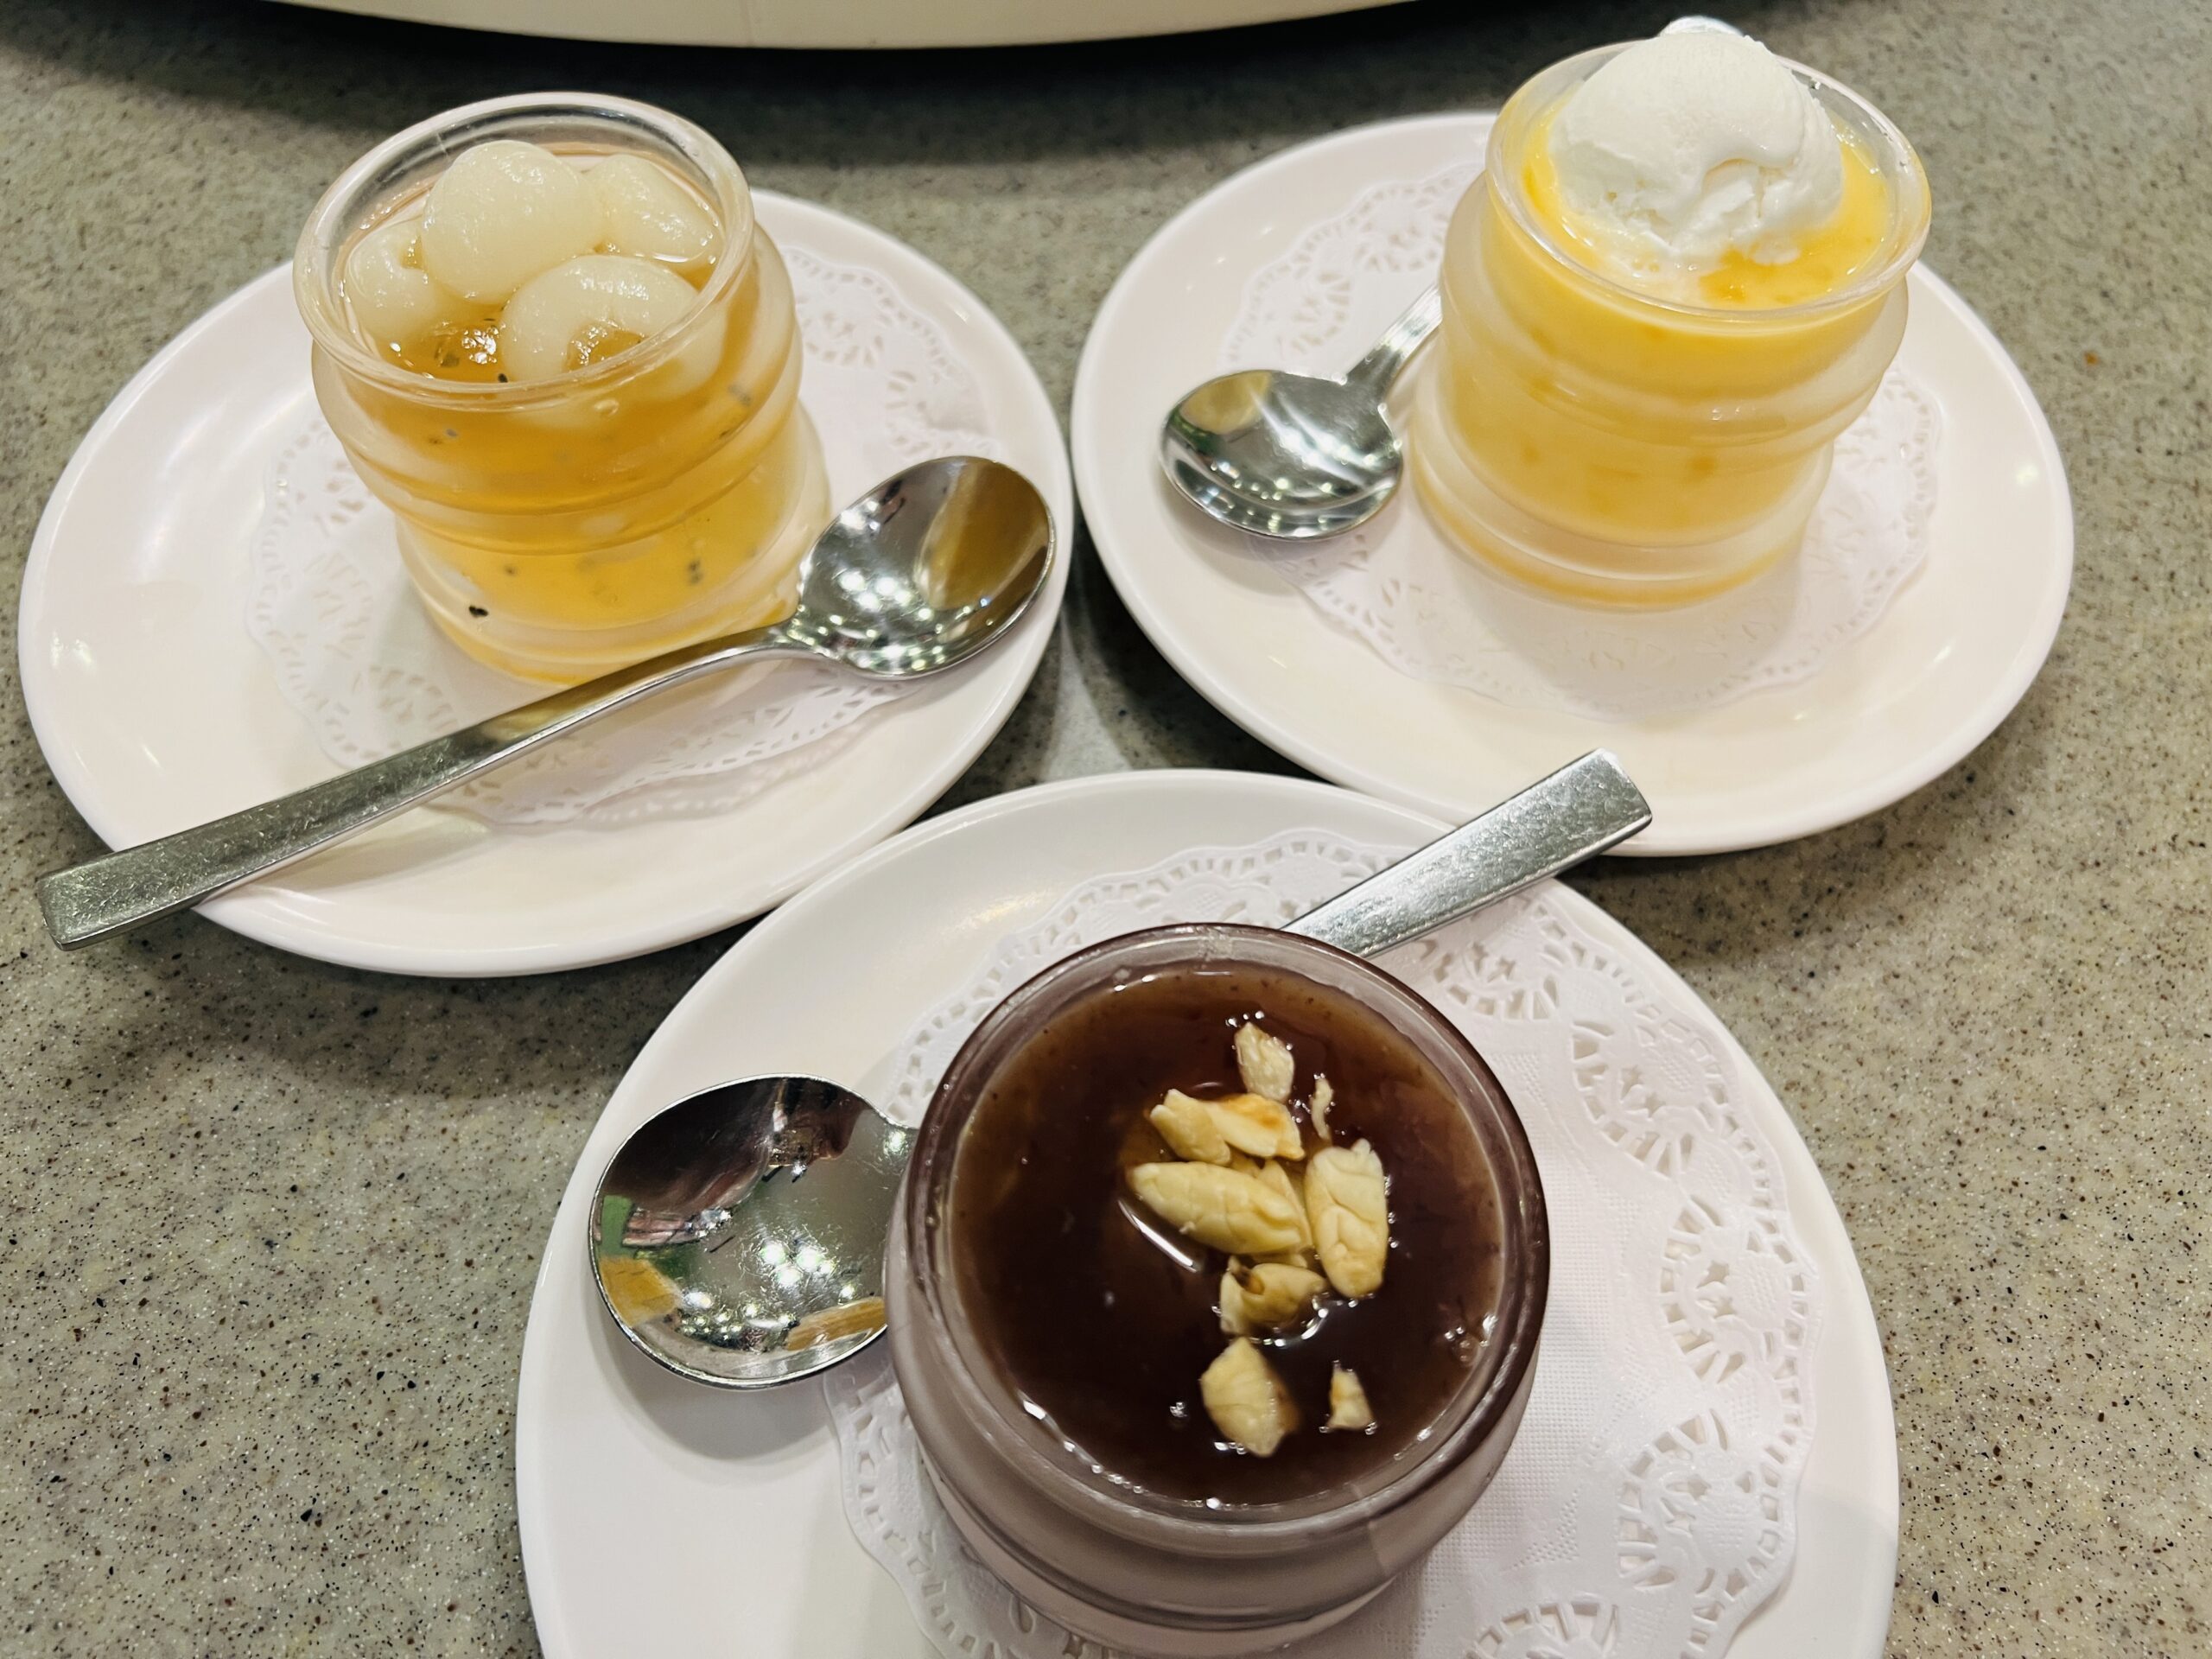 TongLok Teahouse - Desserts